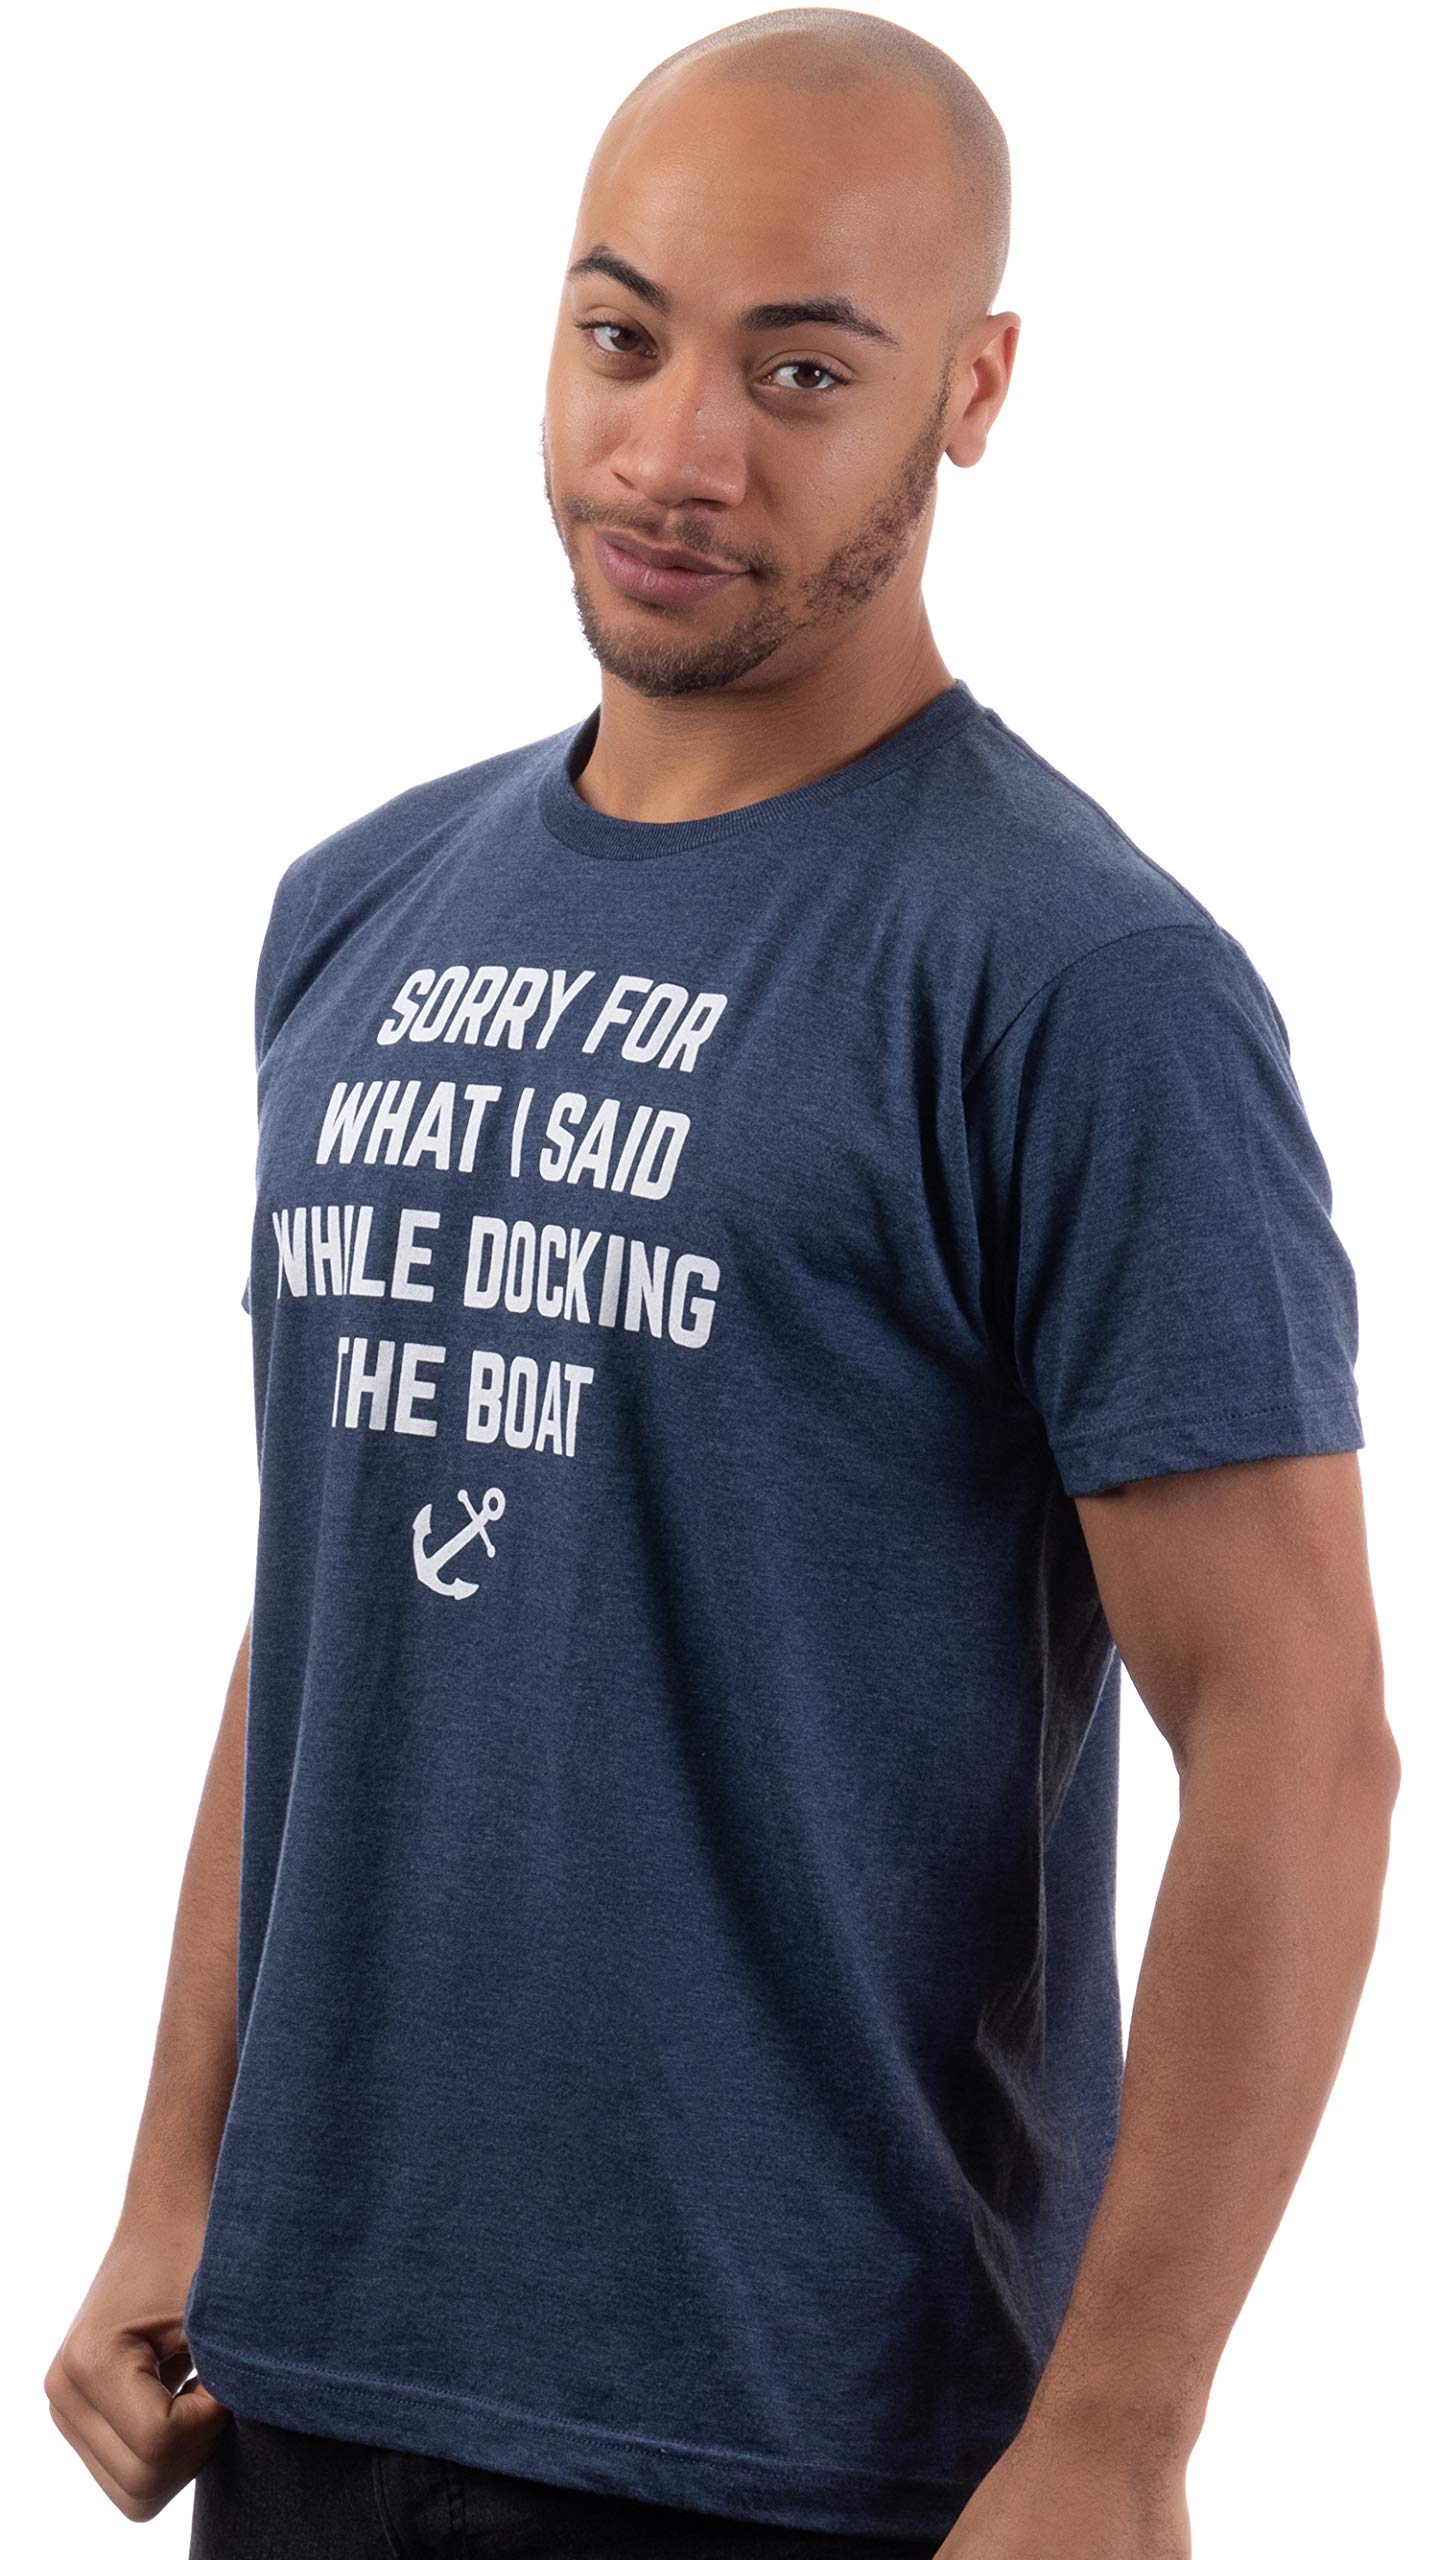 Boating Humor Tee Shirts - Funny Boat Captain, Nautical Fishing Joke T-Shirts for Men or Women